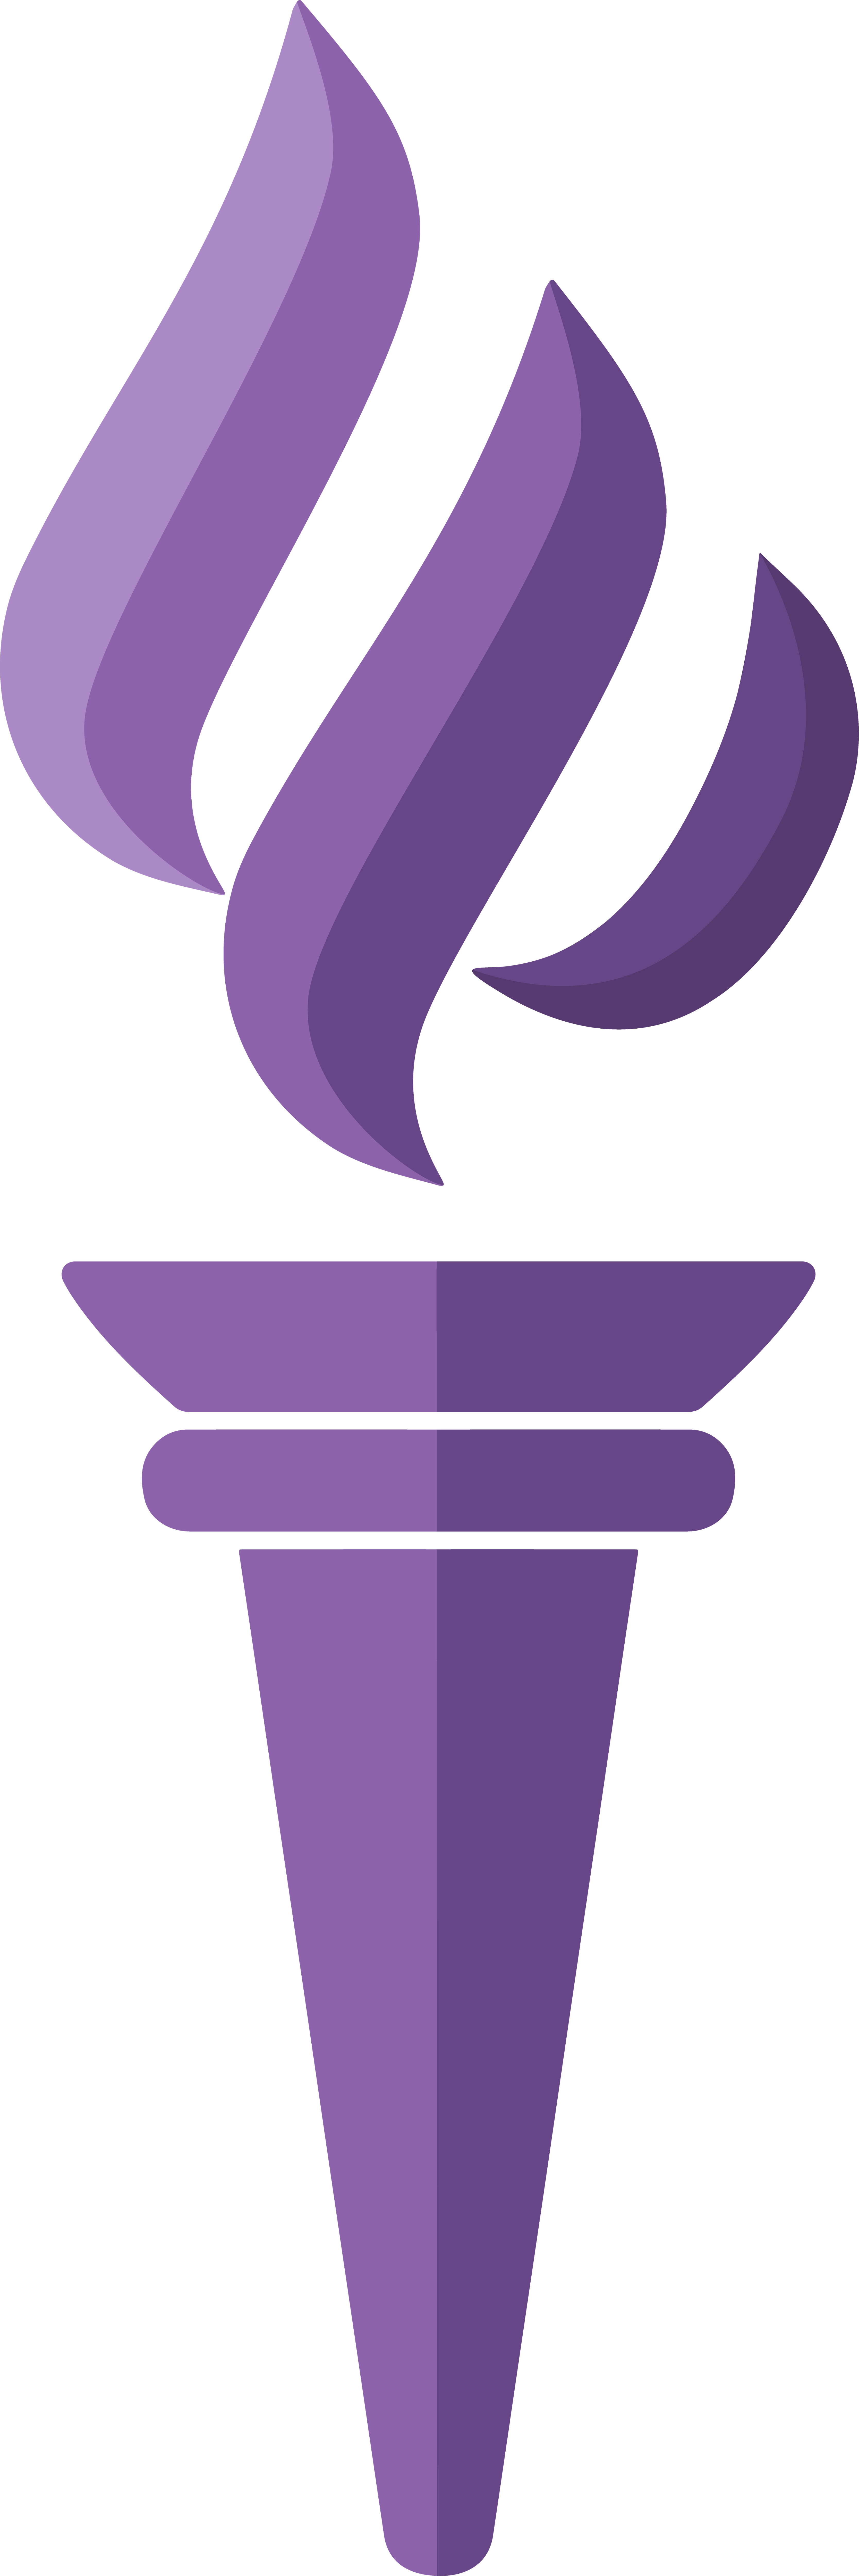 WIN Torch - Logo